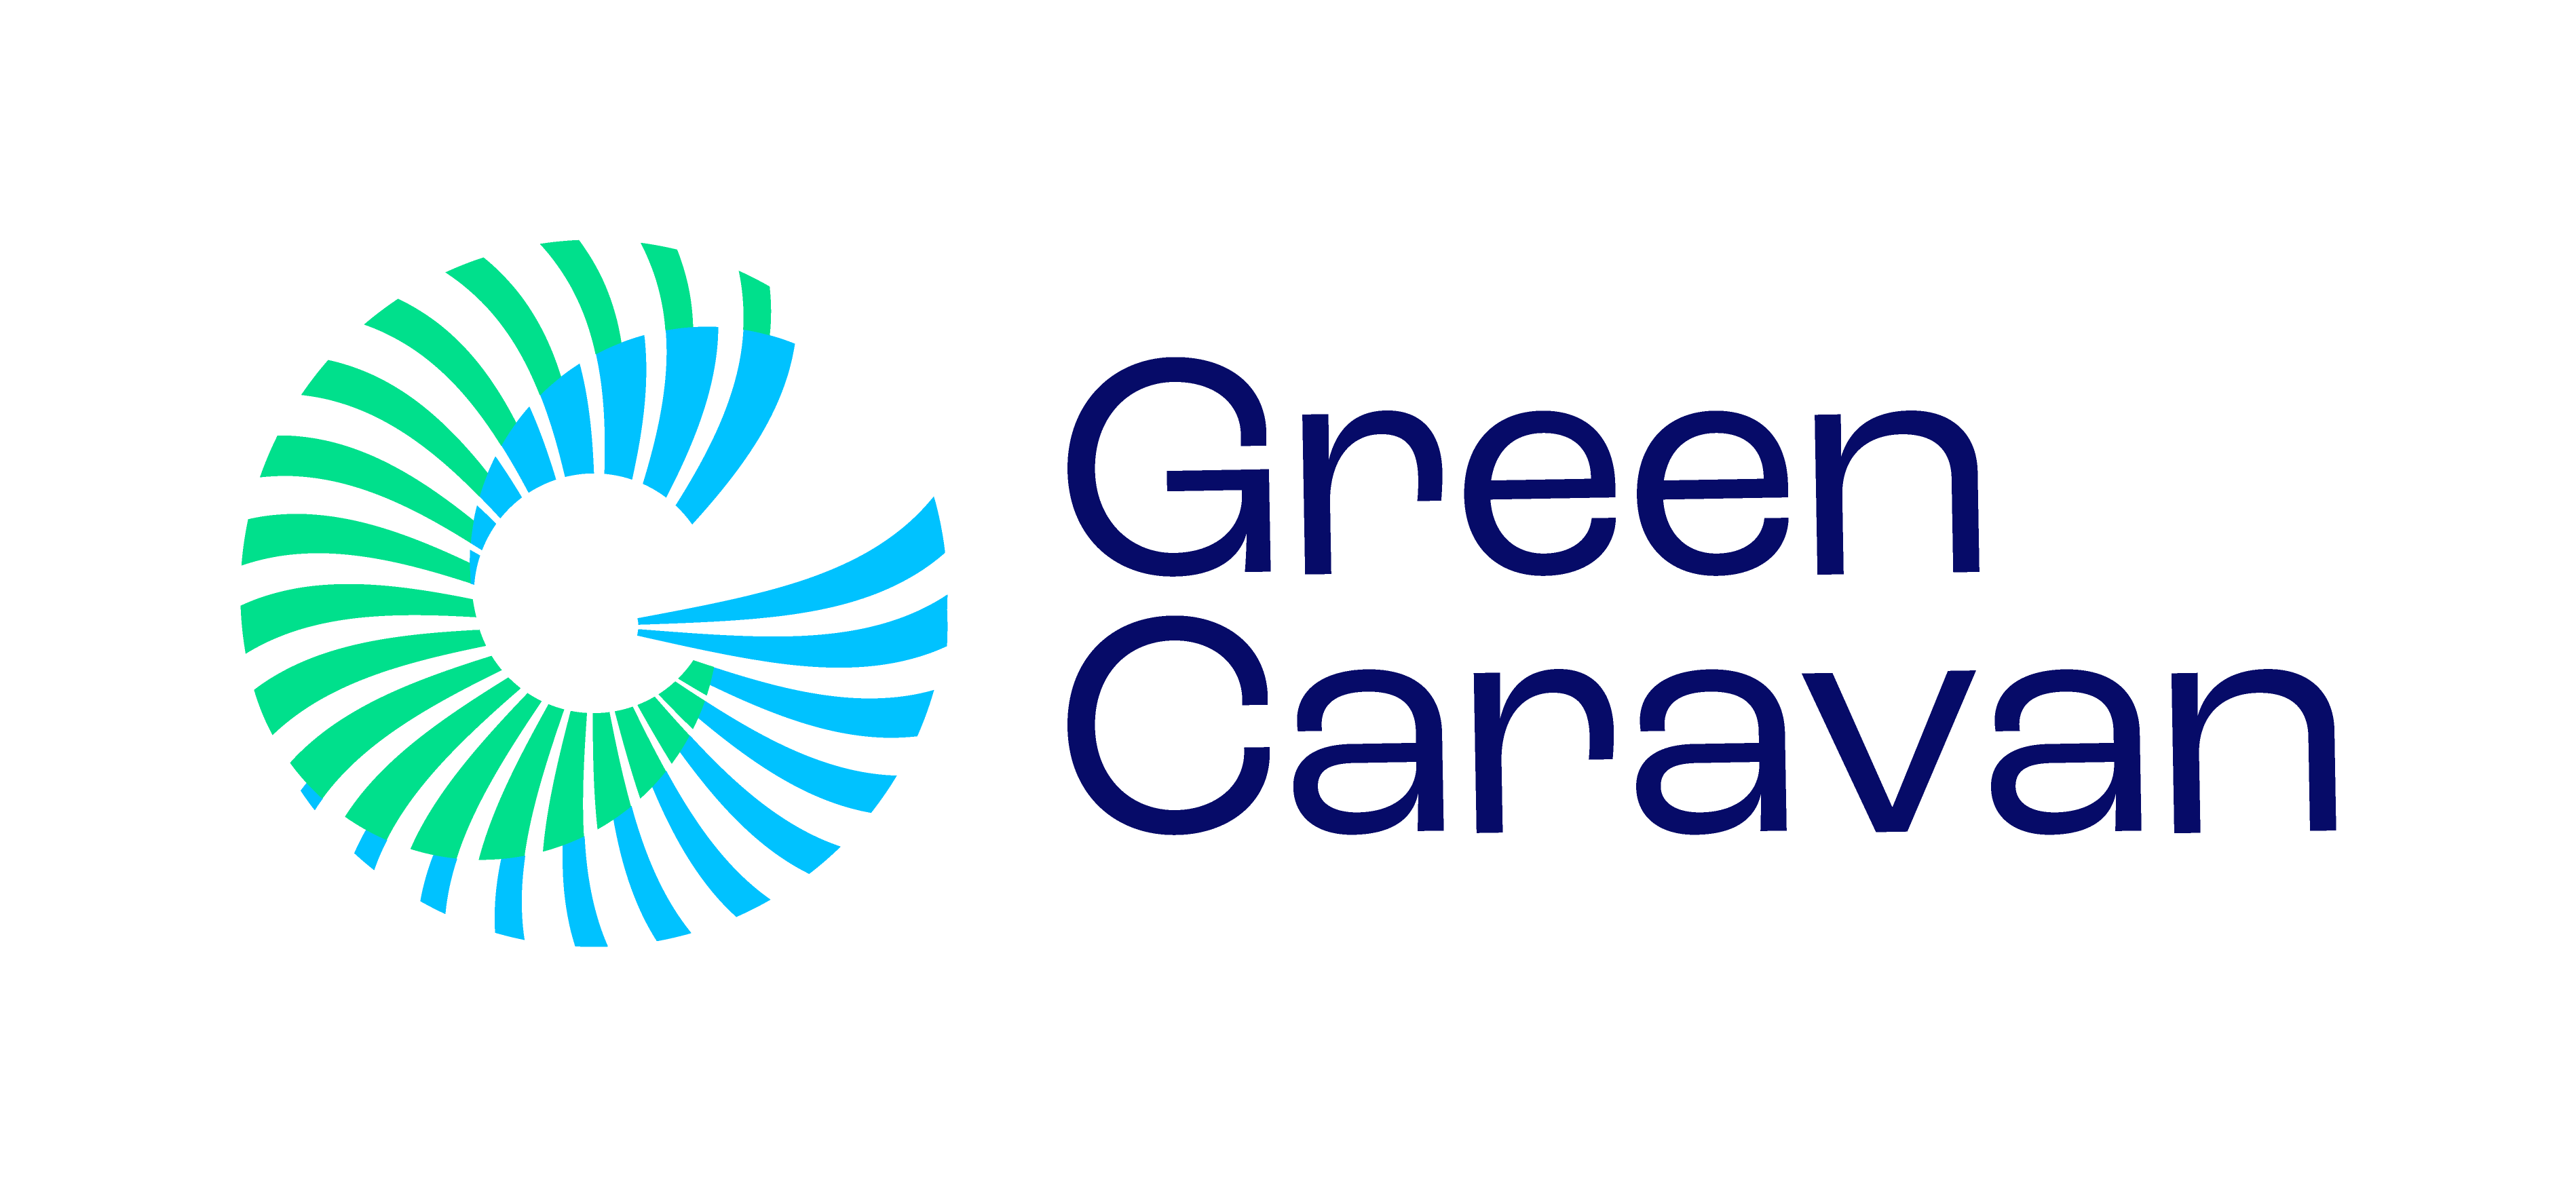 Charge card logo of Green Caravan